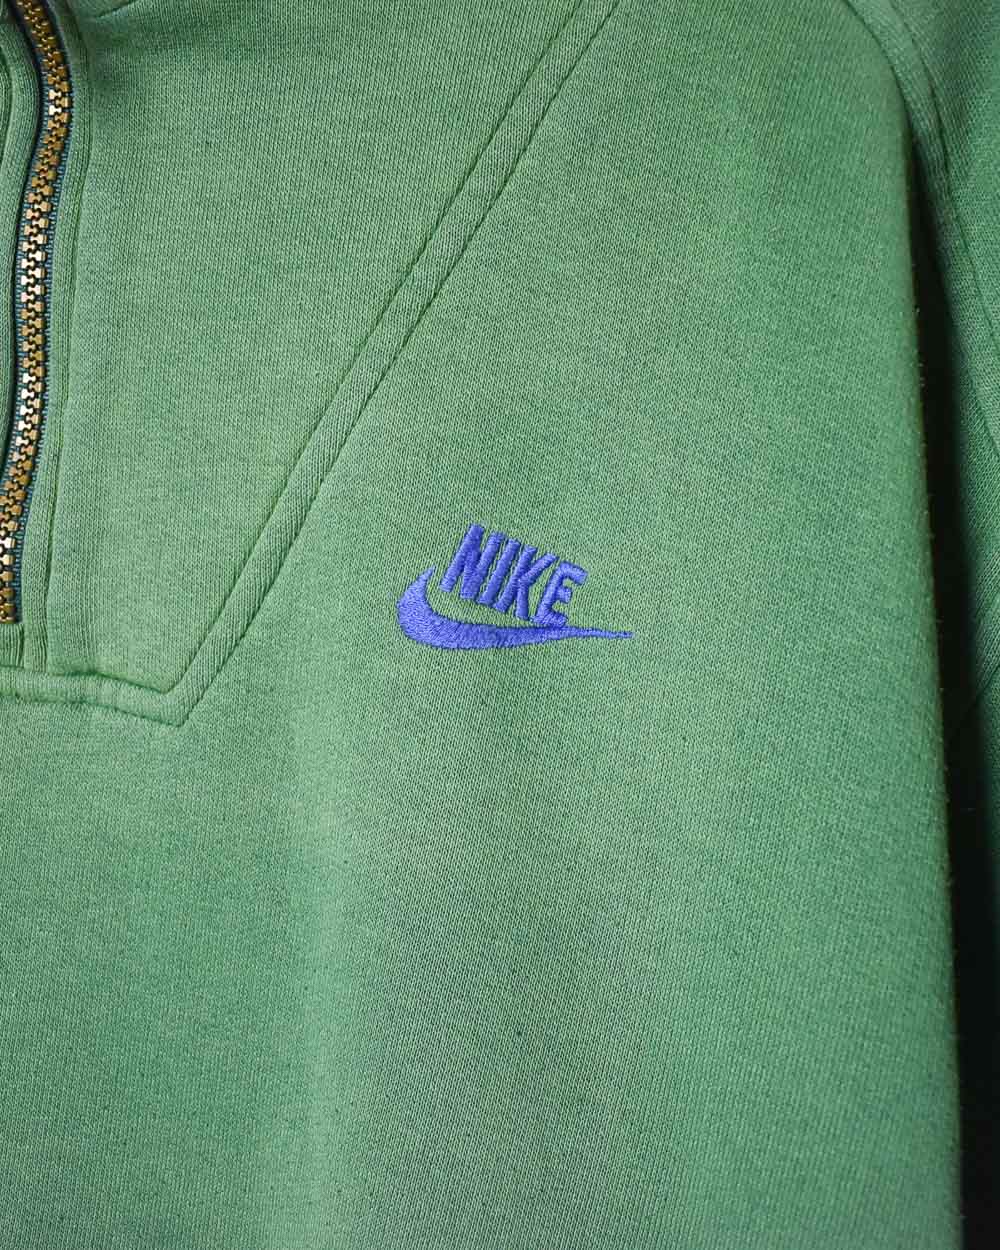 Green Nike USA 1/4 Zip Sweatshirt - Small